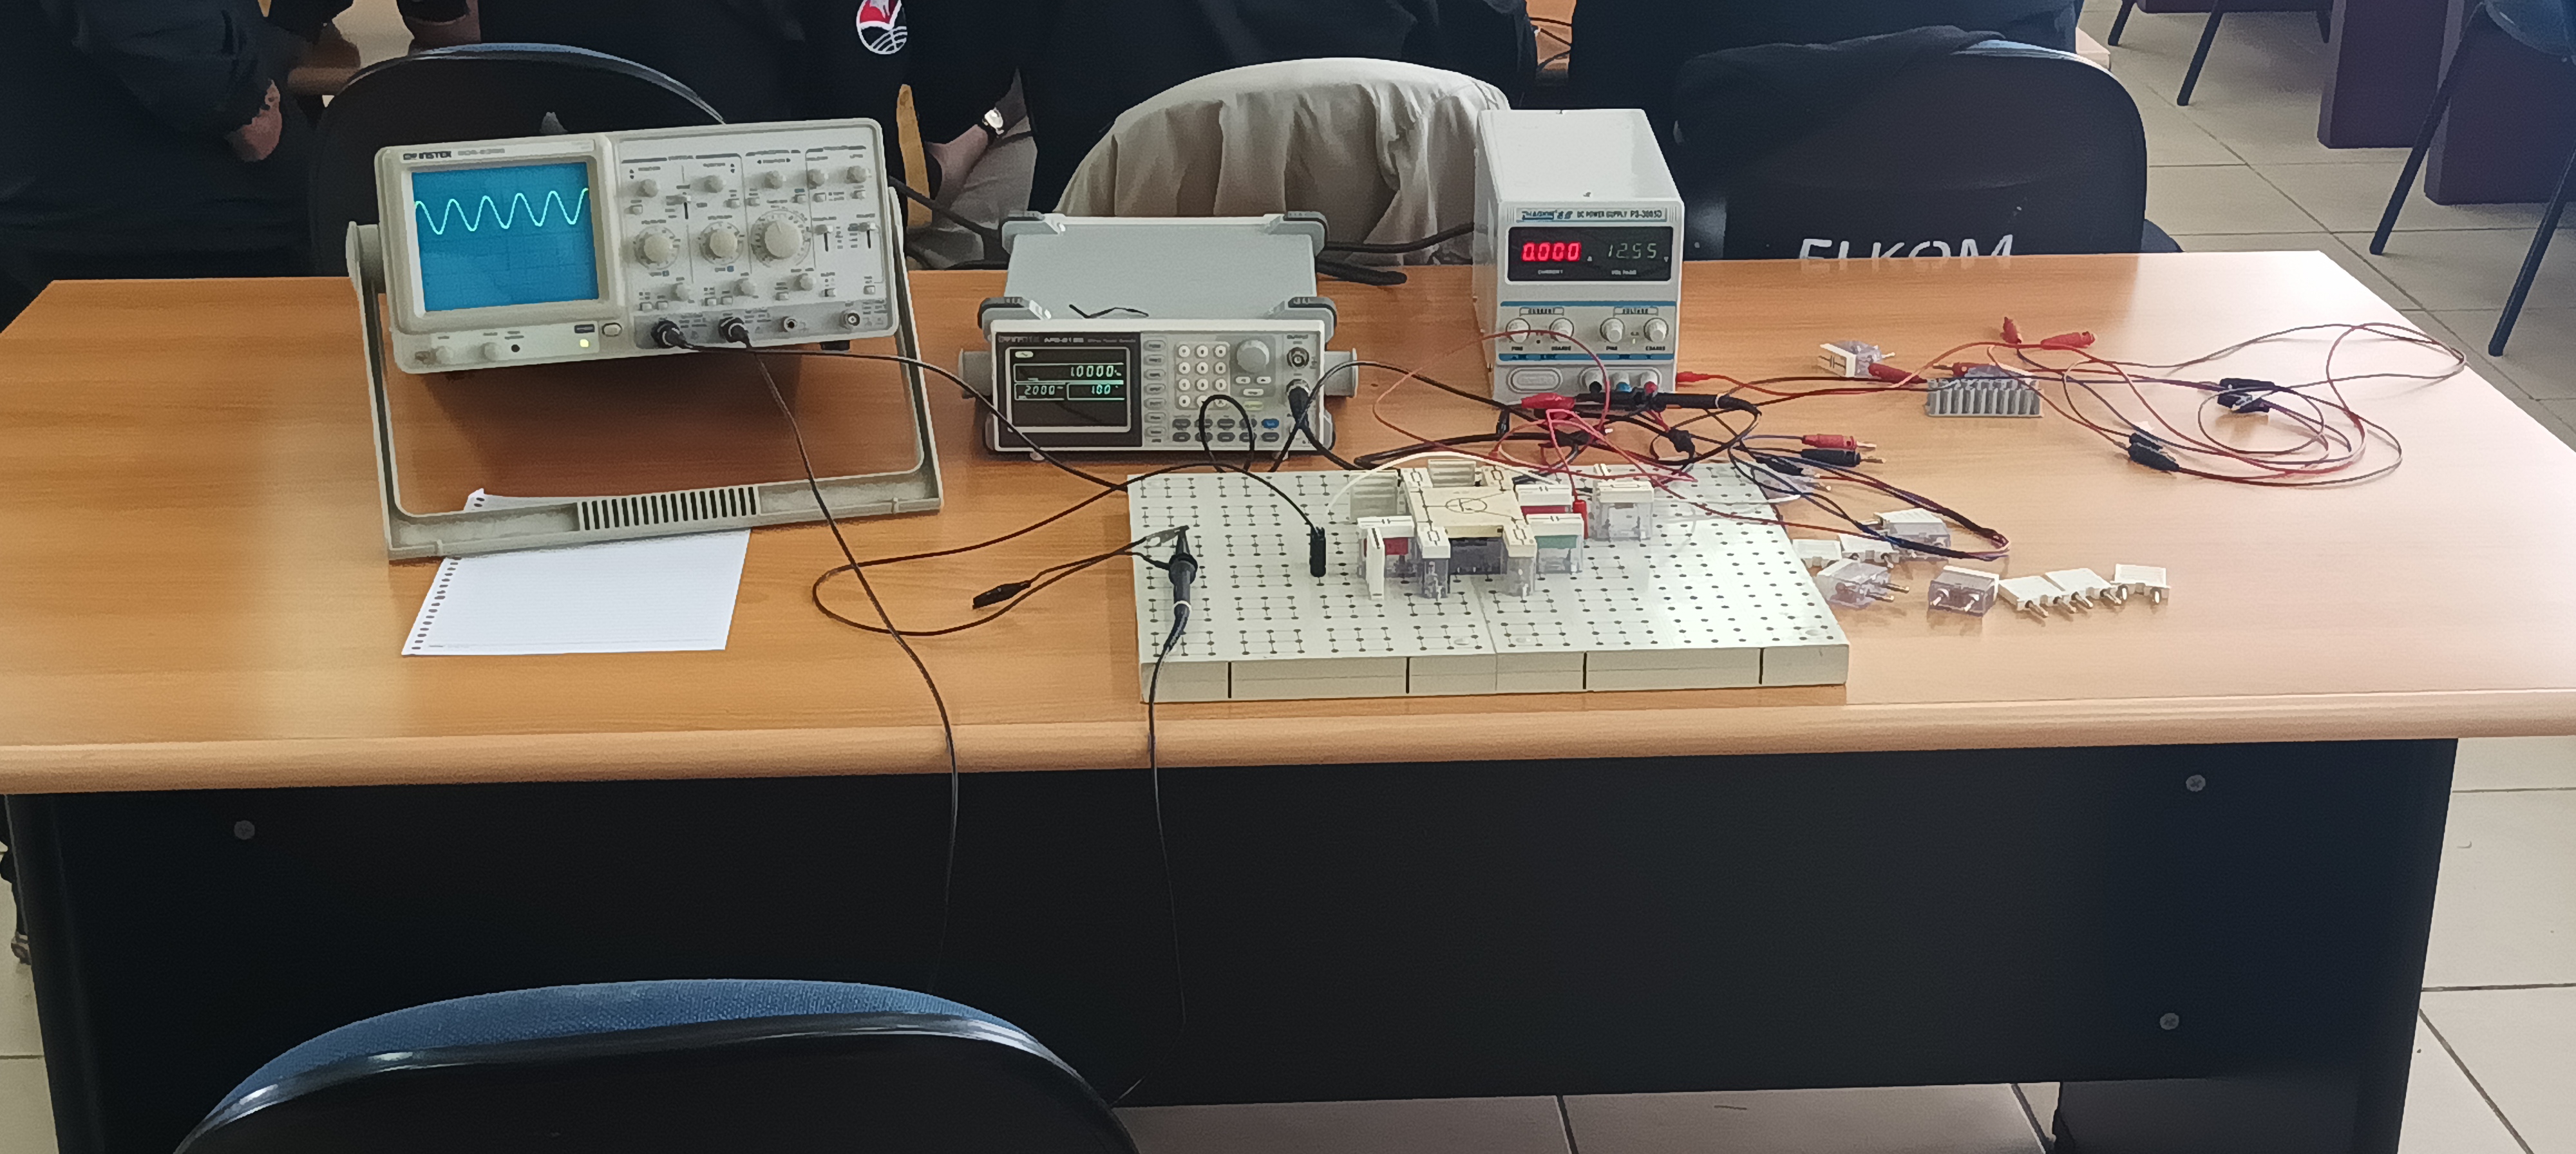 Laboratorium Elektronika Analog dan Digital